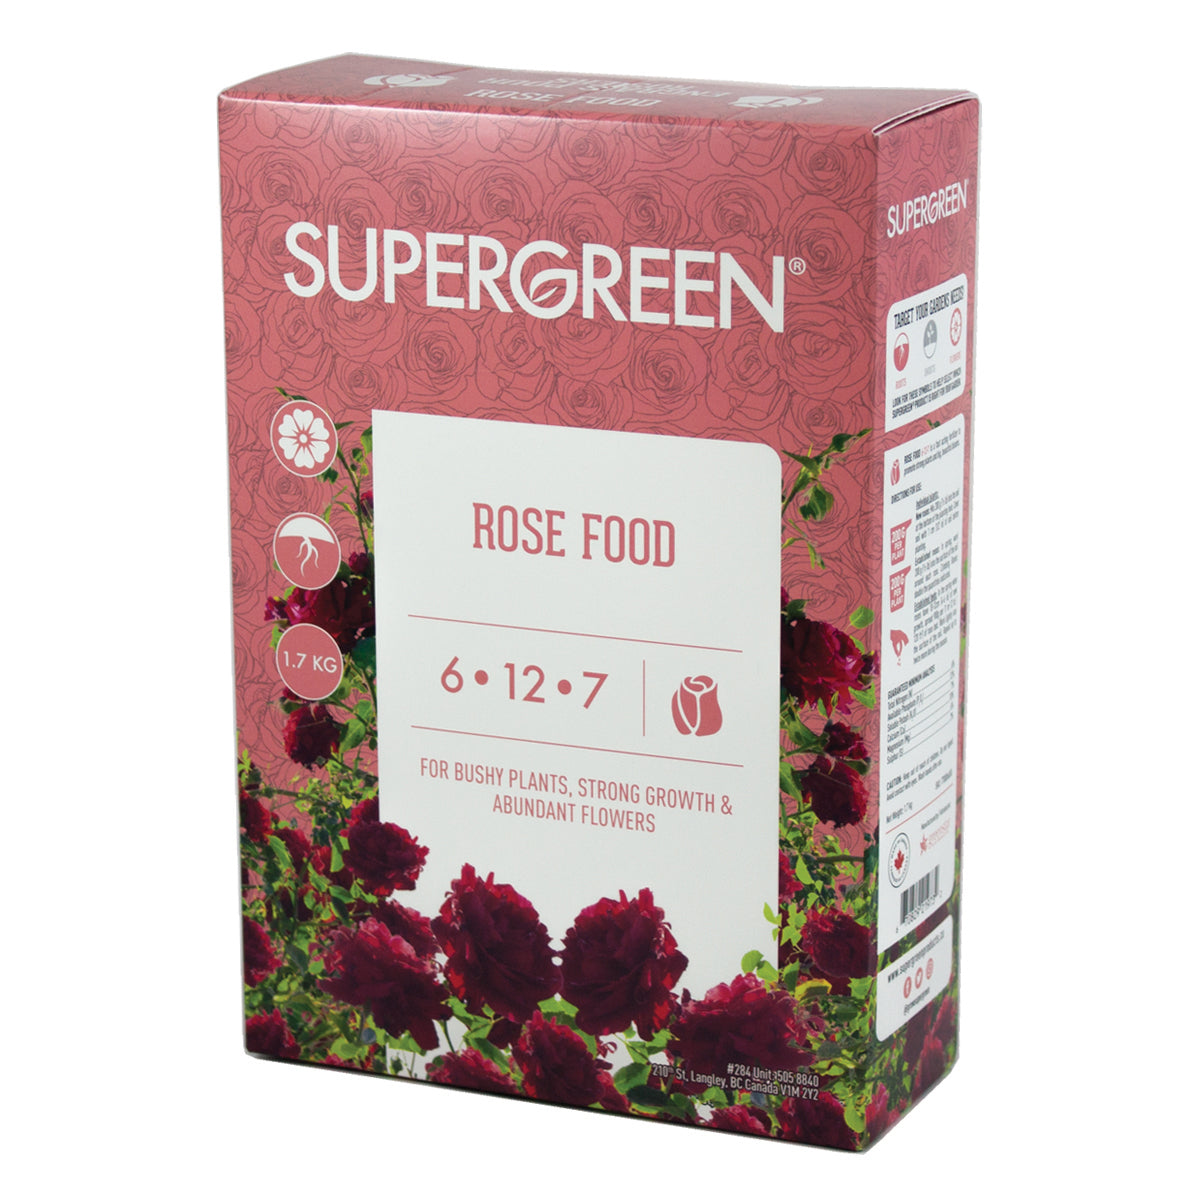 Product Image:Supergreen Rose Food 6-12-7 1.7kg